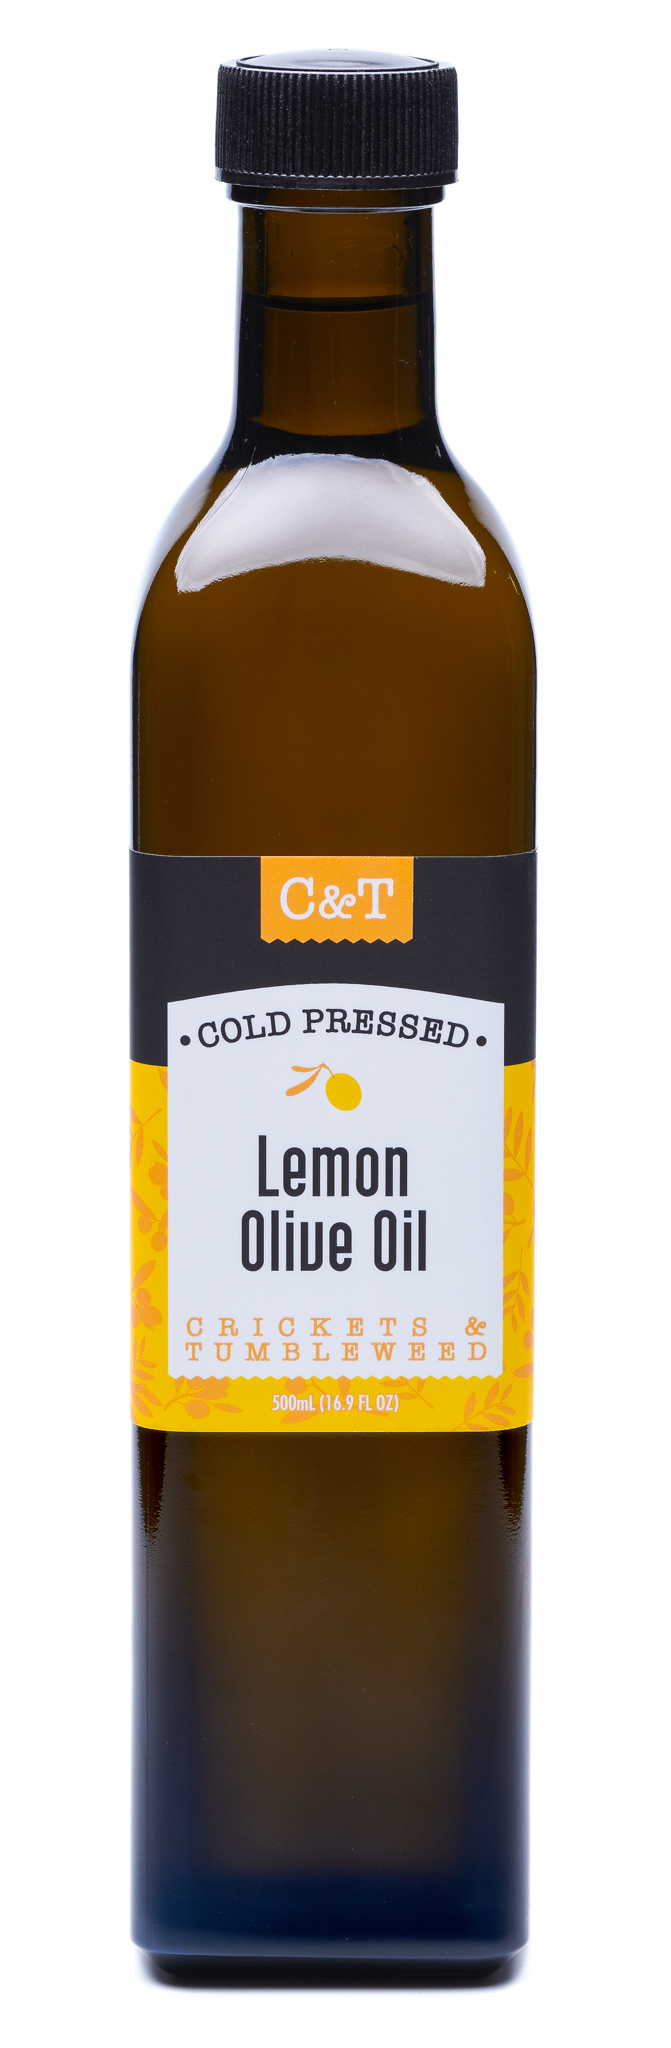 Product Image for C&T Olive Oil Lemon